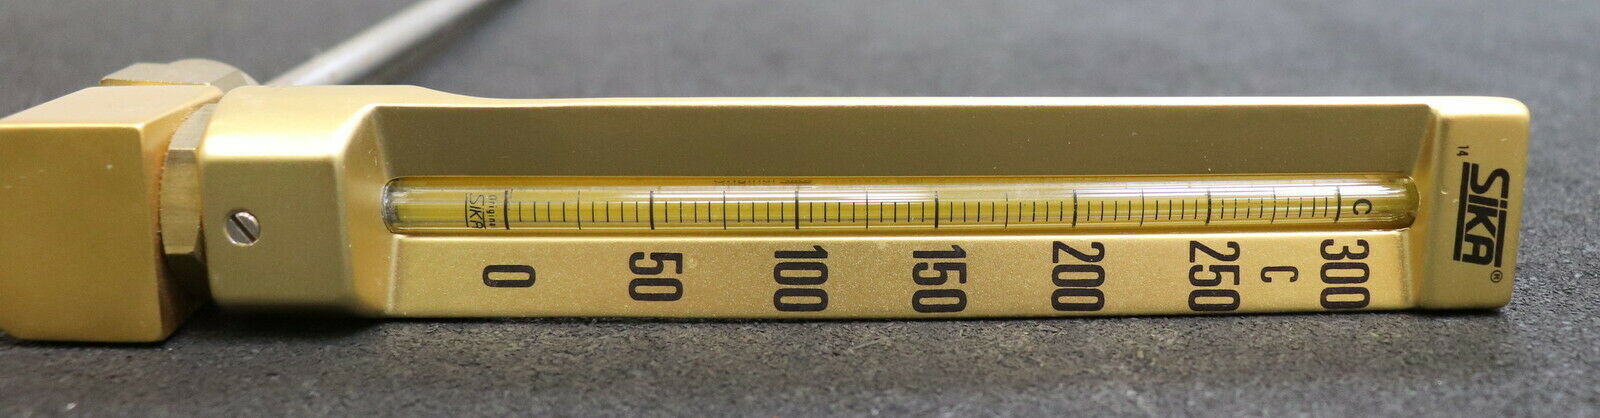 SIKA Winkel-Thermometer Maschinenthermometer 0-300°C - Messstablänge 420mm - 90°